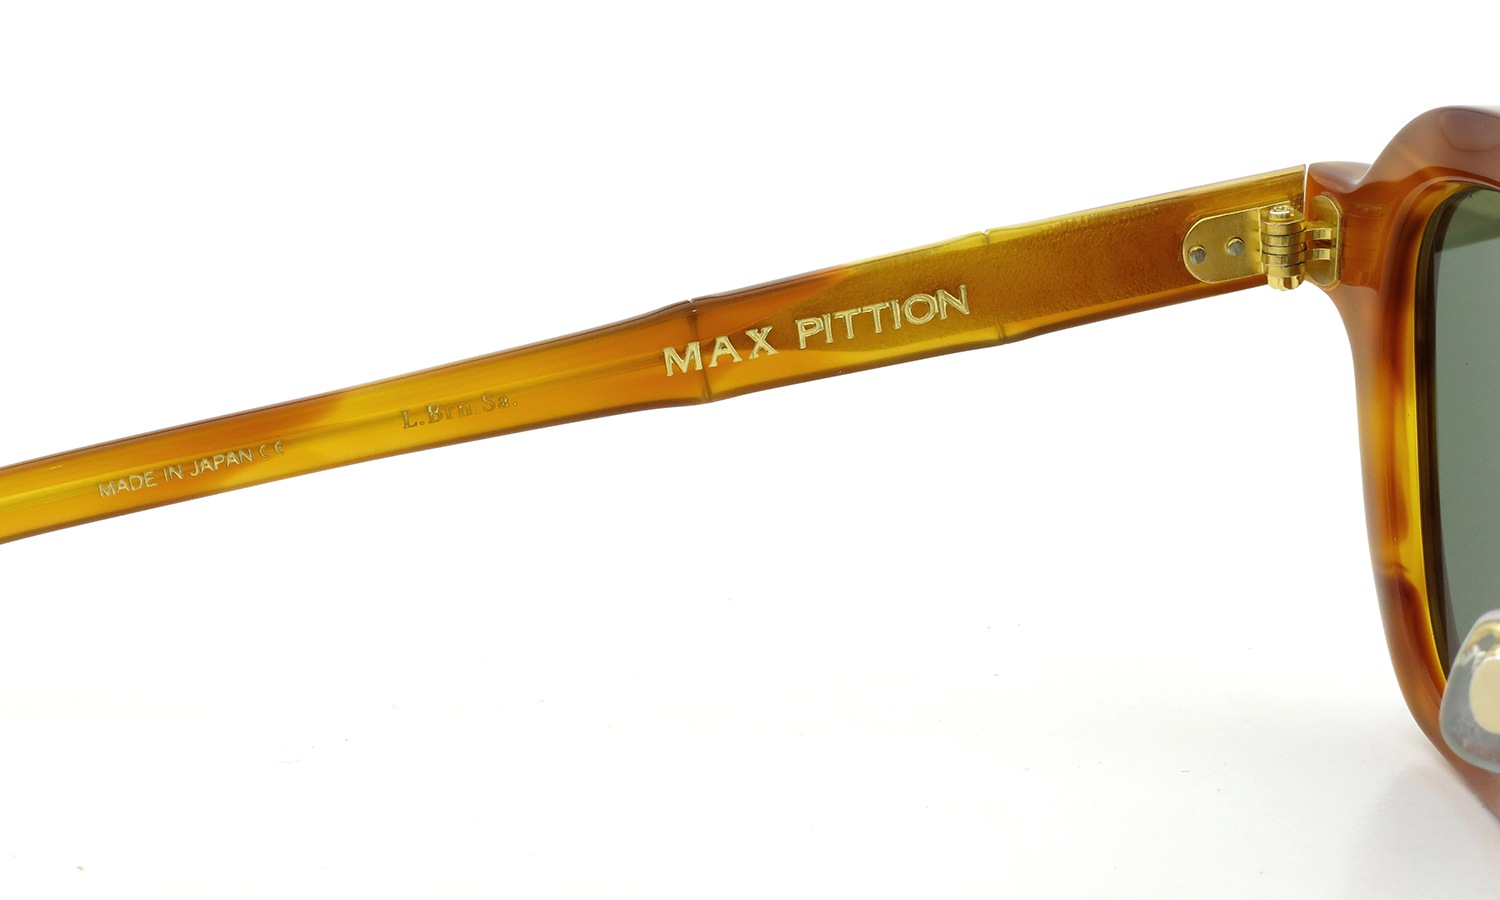 MAX PITTION Bronson 44size L.Bra.Sa. Lense:G15